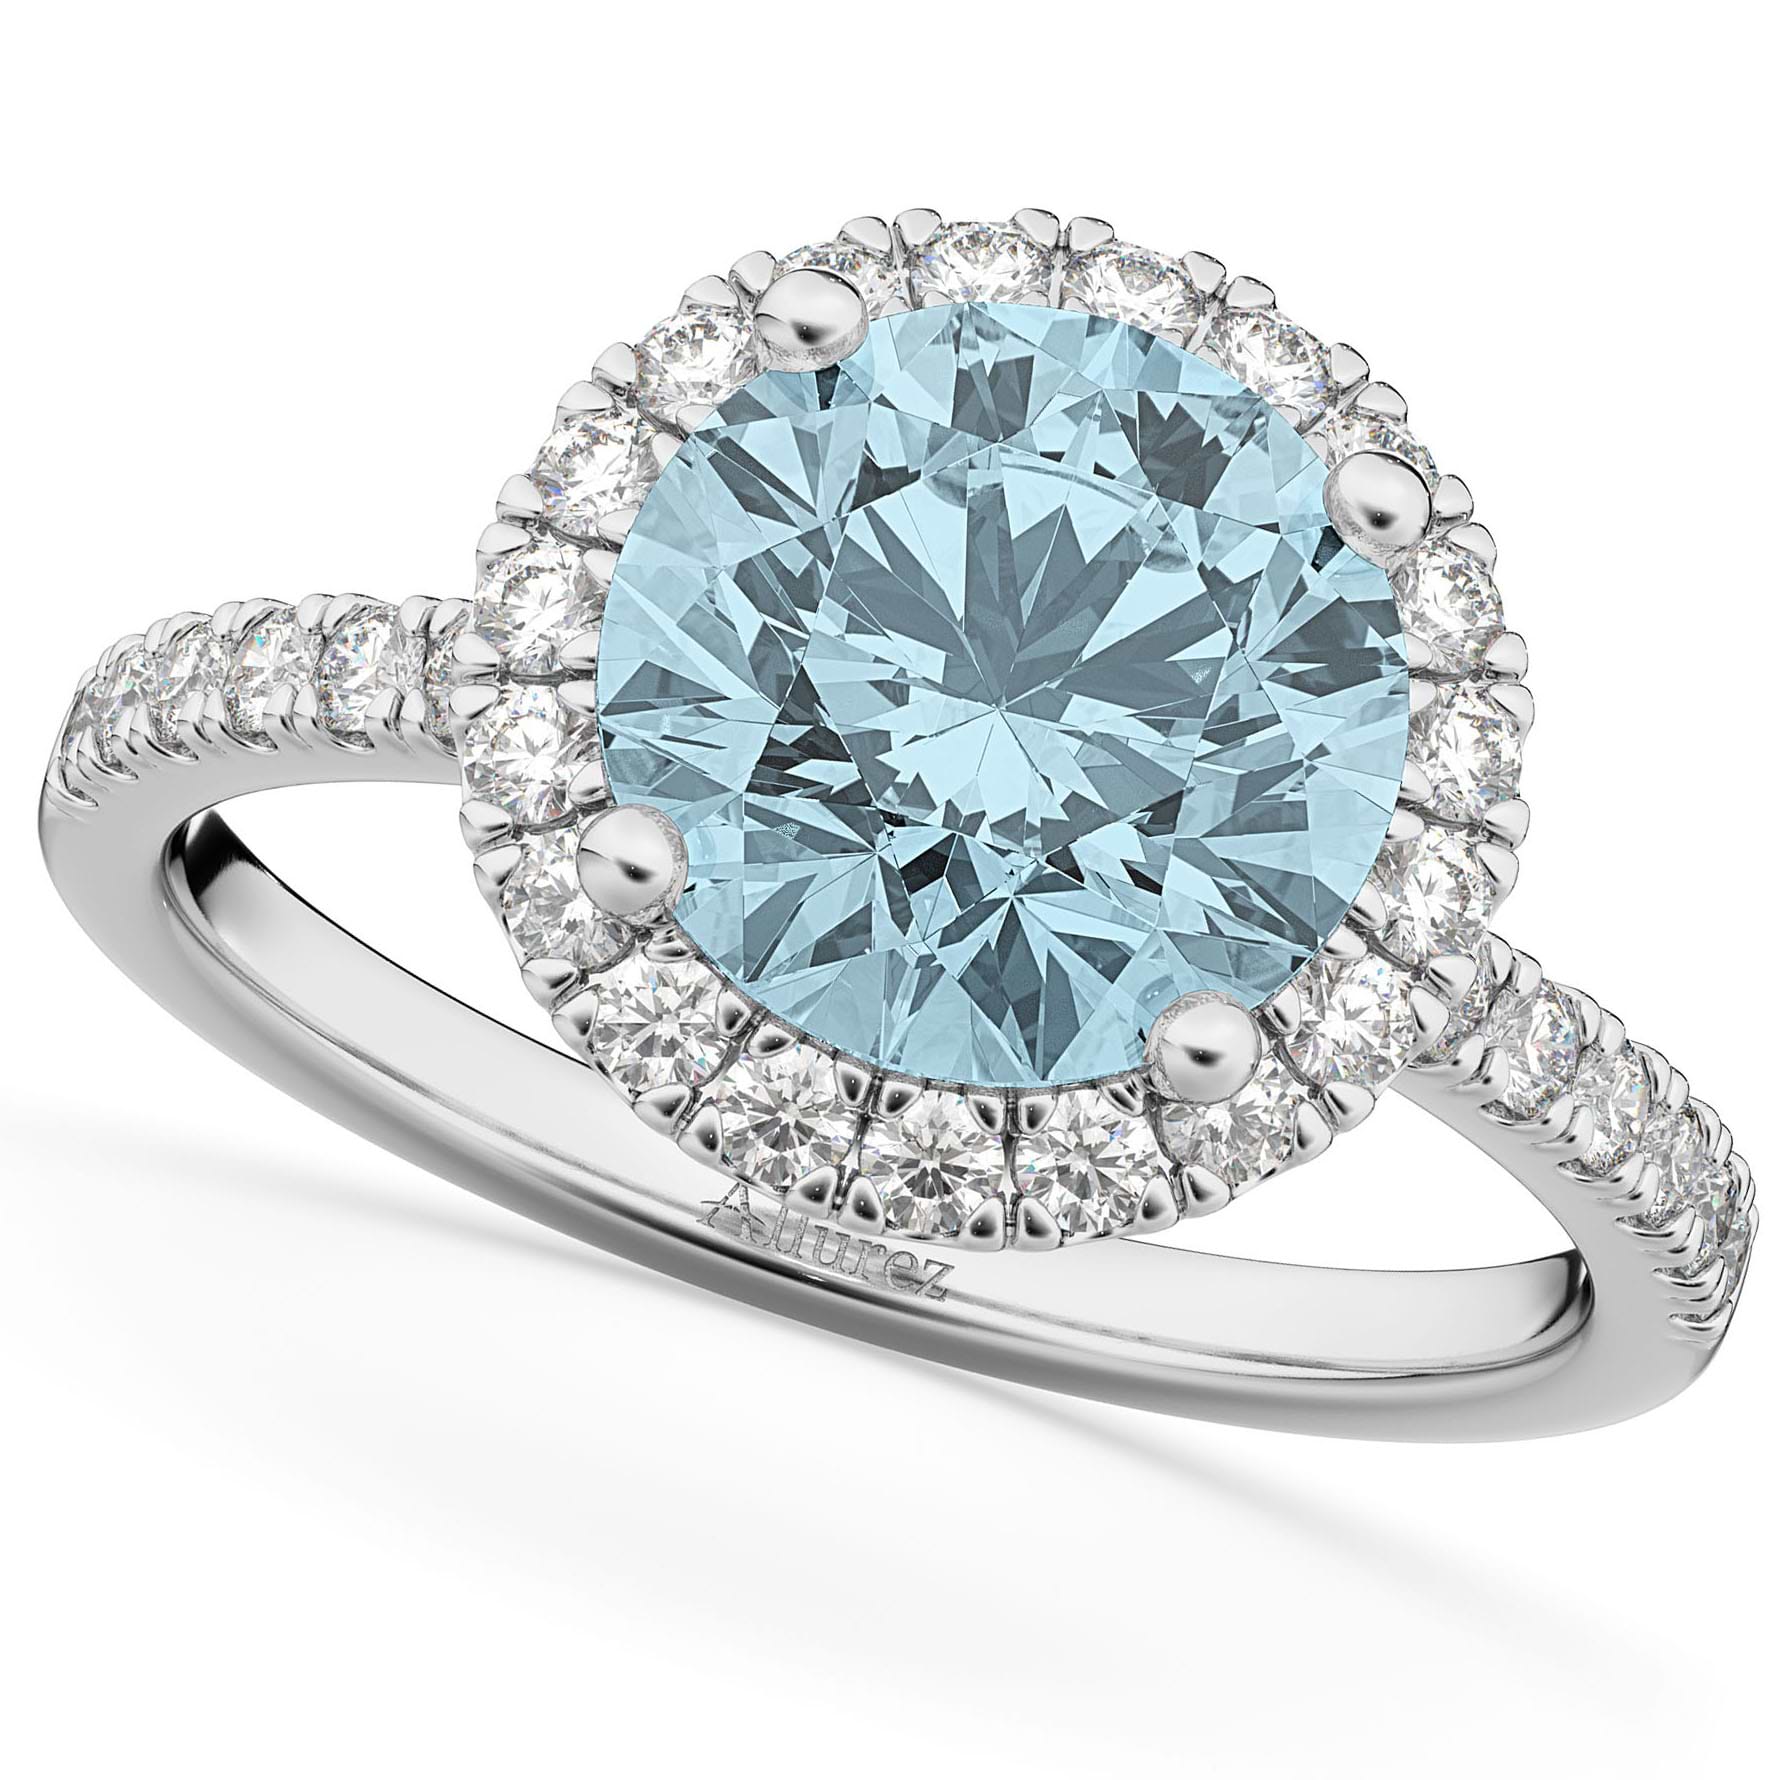 Halo Aquamarine & Diamond Engagement Ring 18K White Gold 2.70ct